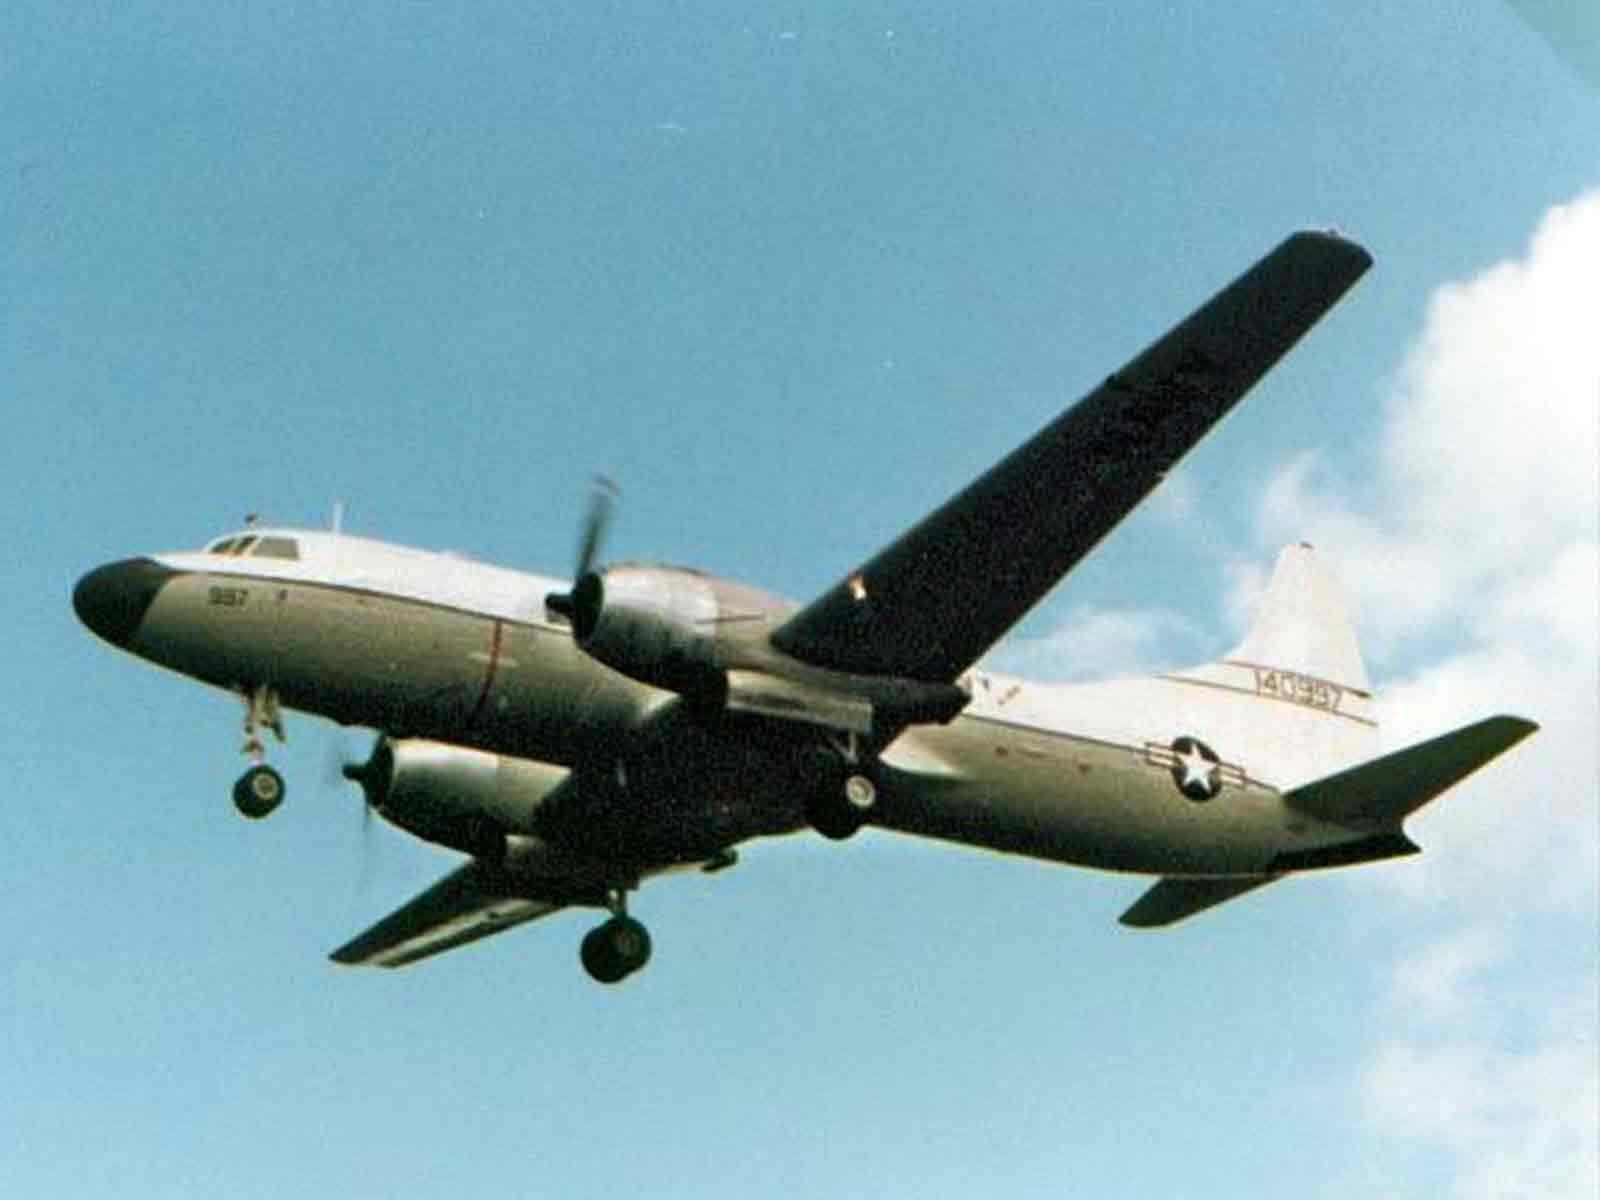 CONVAIR C-131 Samaritan: USAF and US Navy’s VIP Transport Aircraft